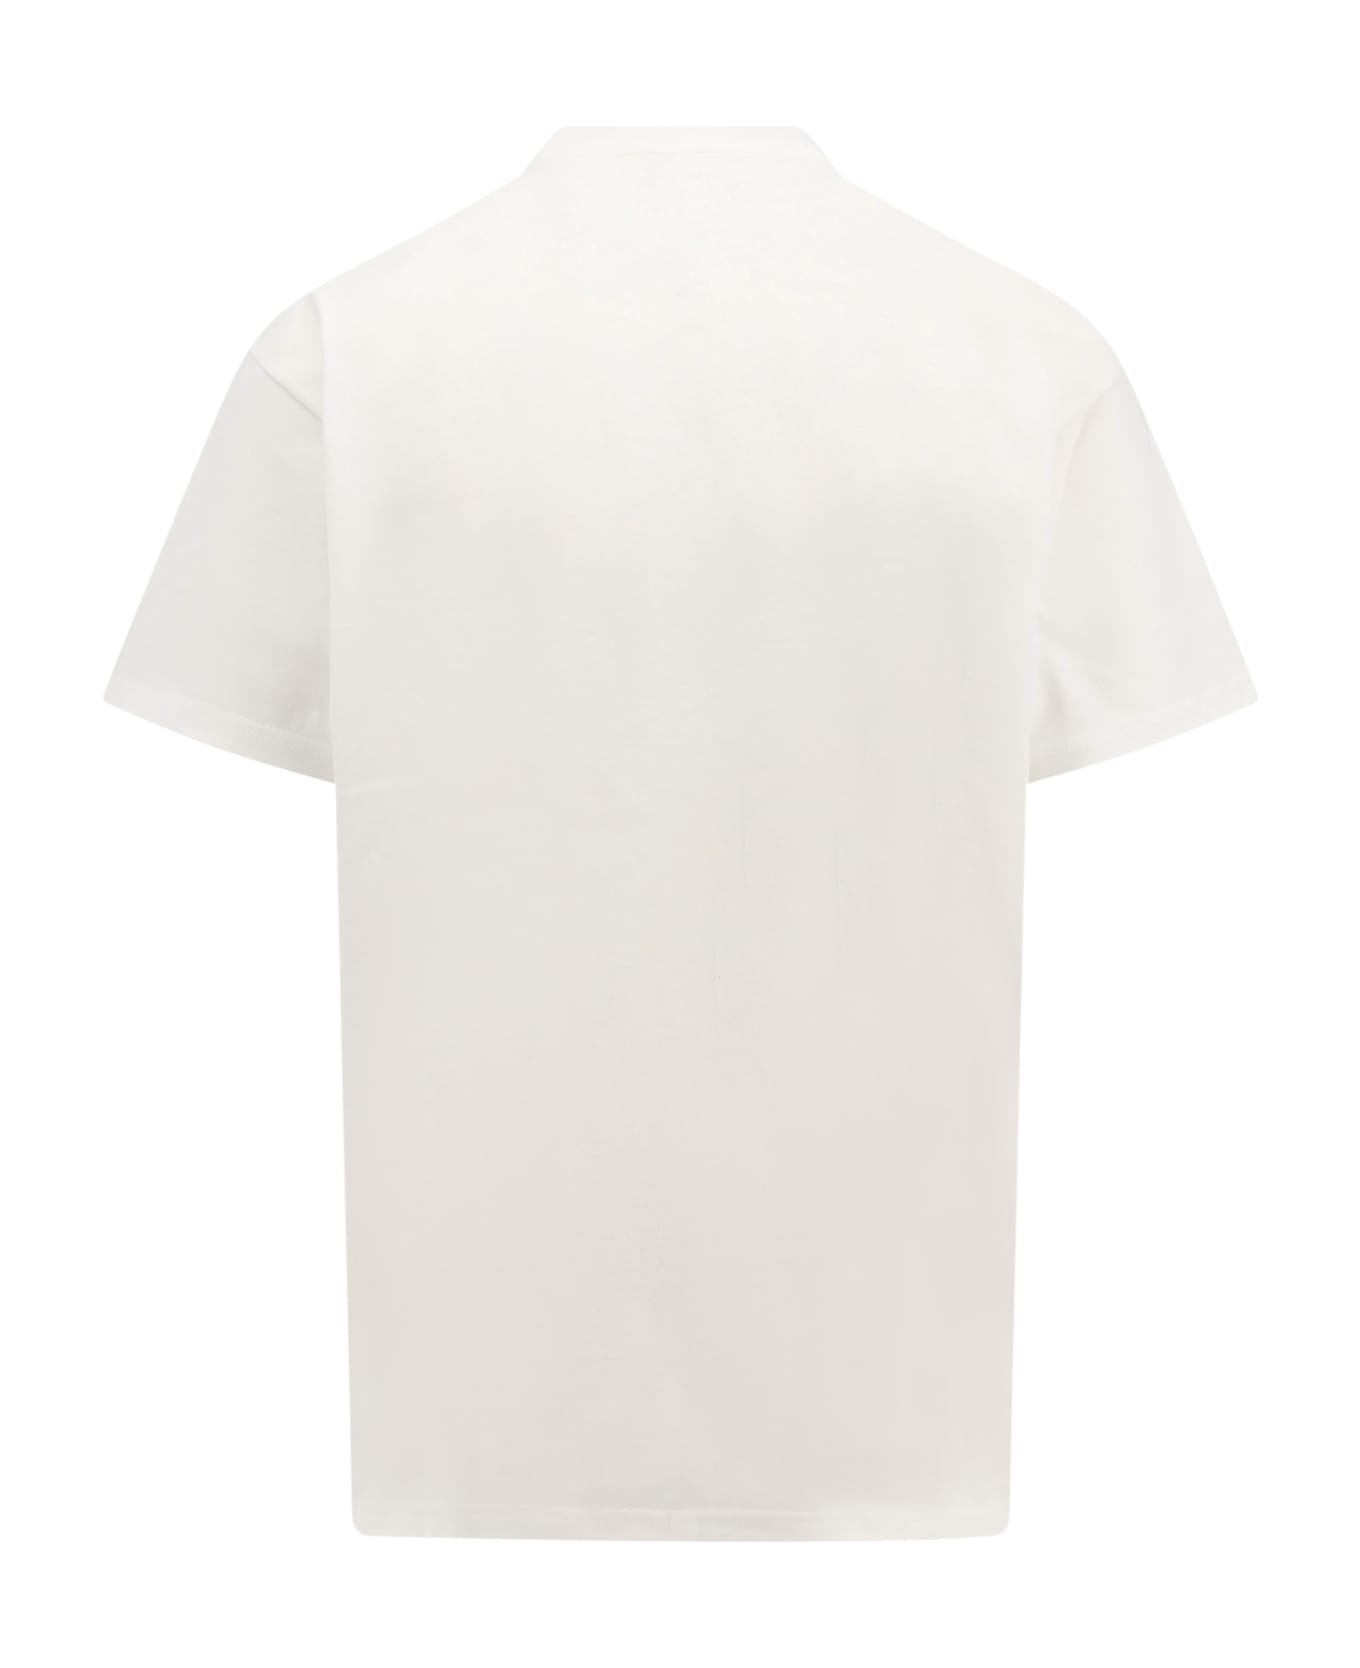 Carhartt T-shirt - White/black